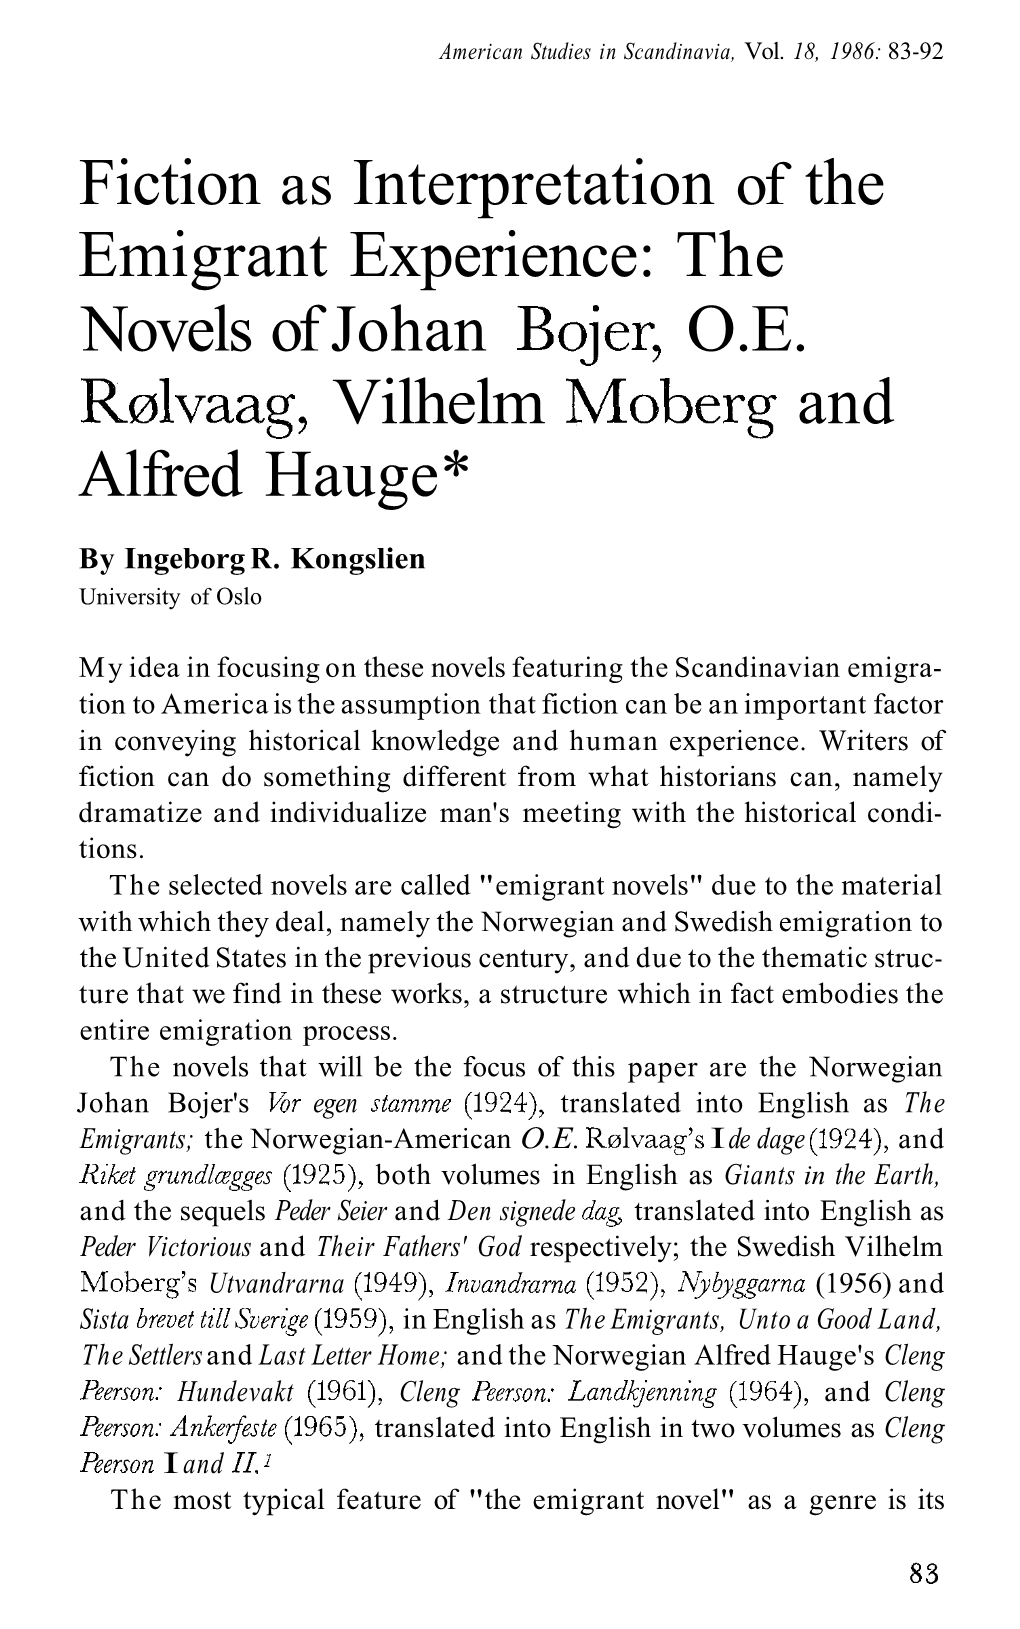 Fiction As Interpretation of the Emigrant Experience: the Novels of Johan Bojer, O.E